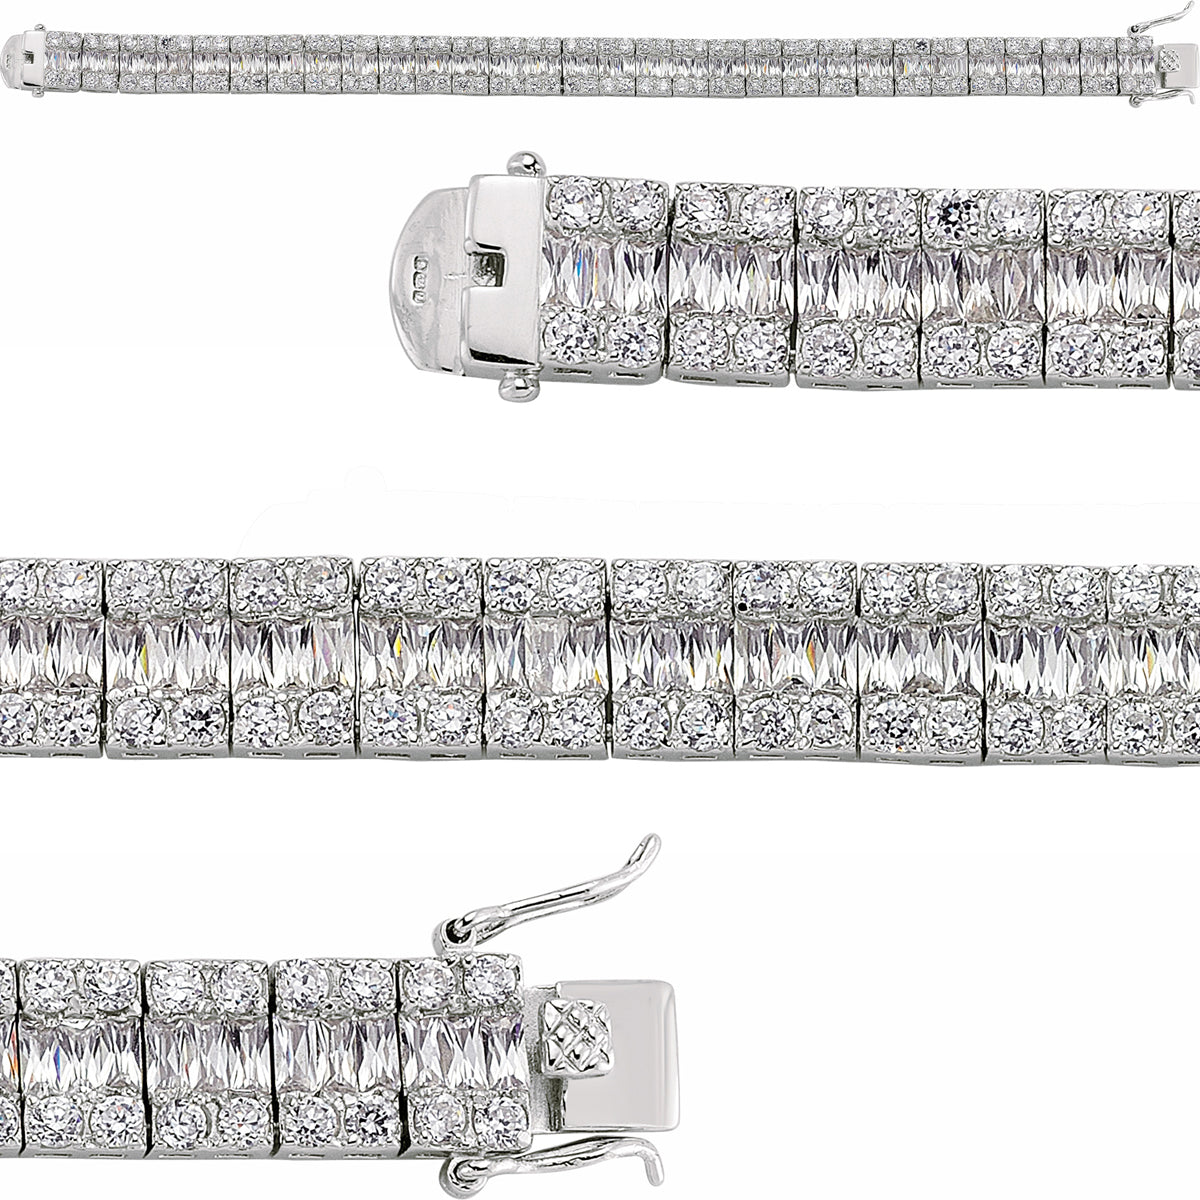 Silver  Baguette CZ Eternity Tennis Bracelet 10mm 7 inch - GVB112